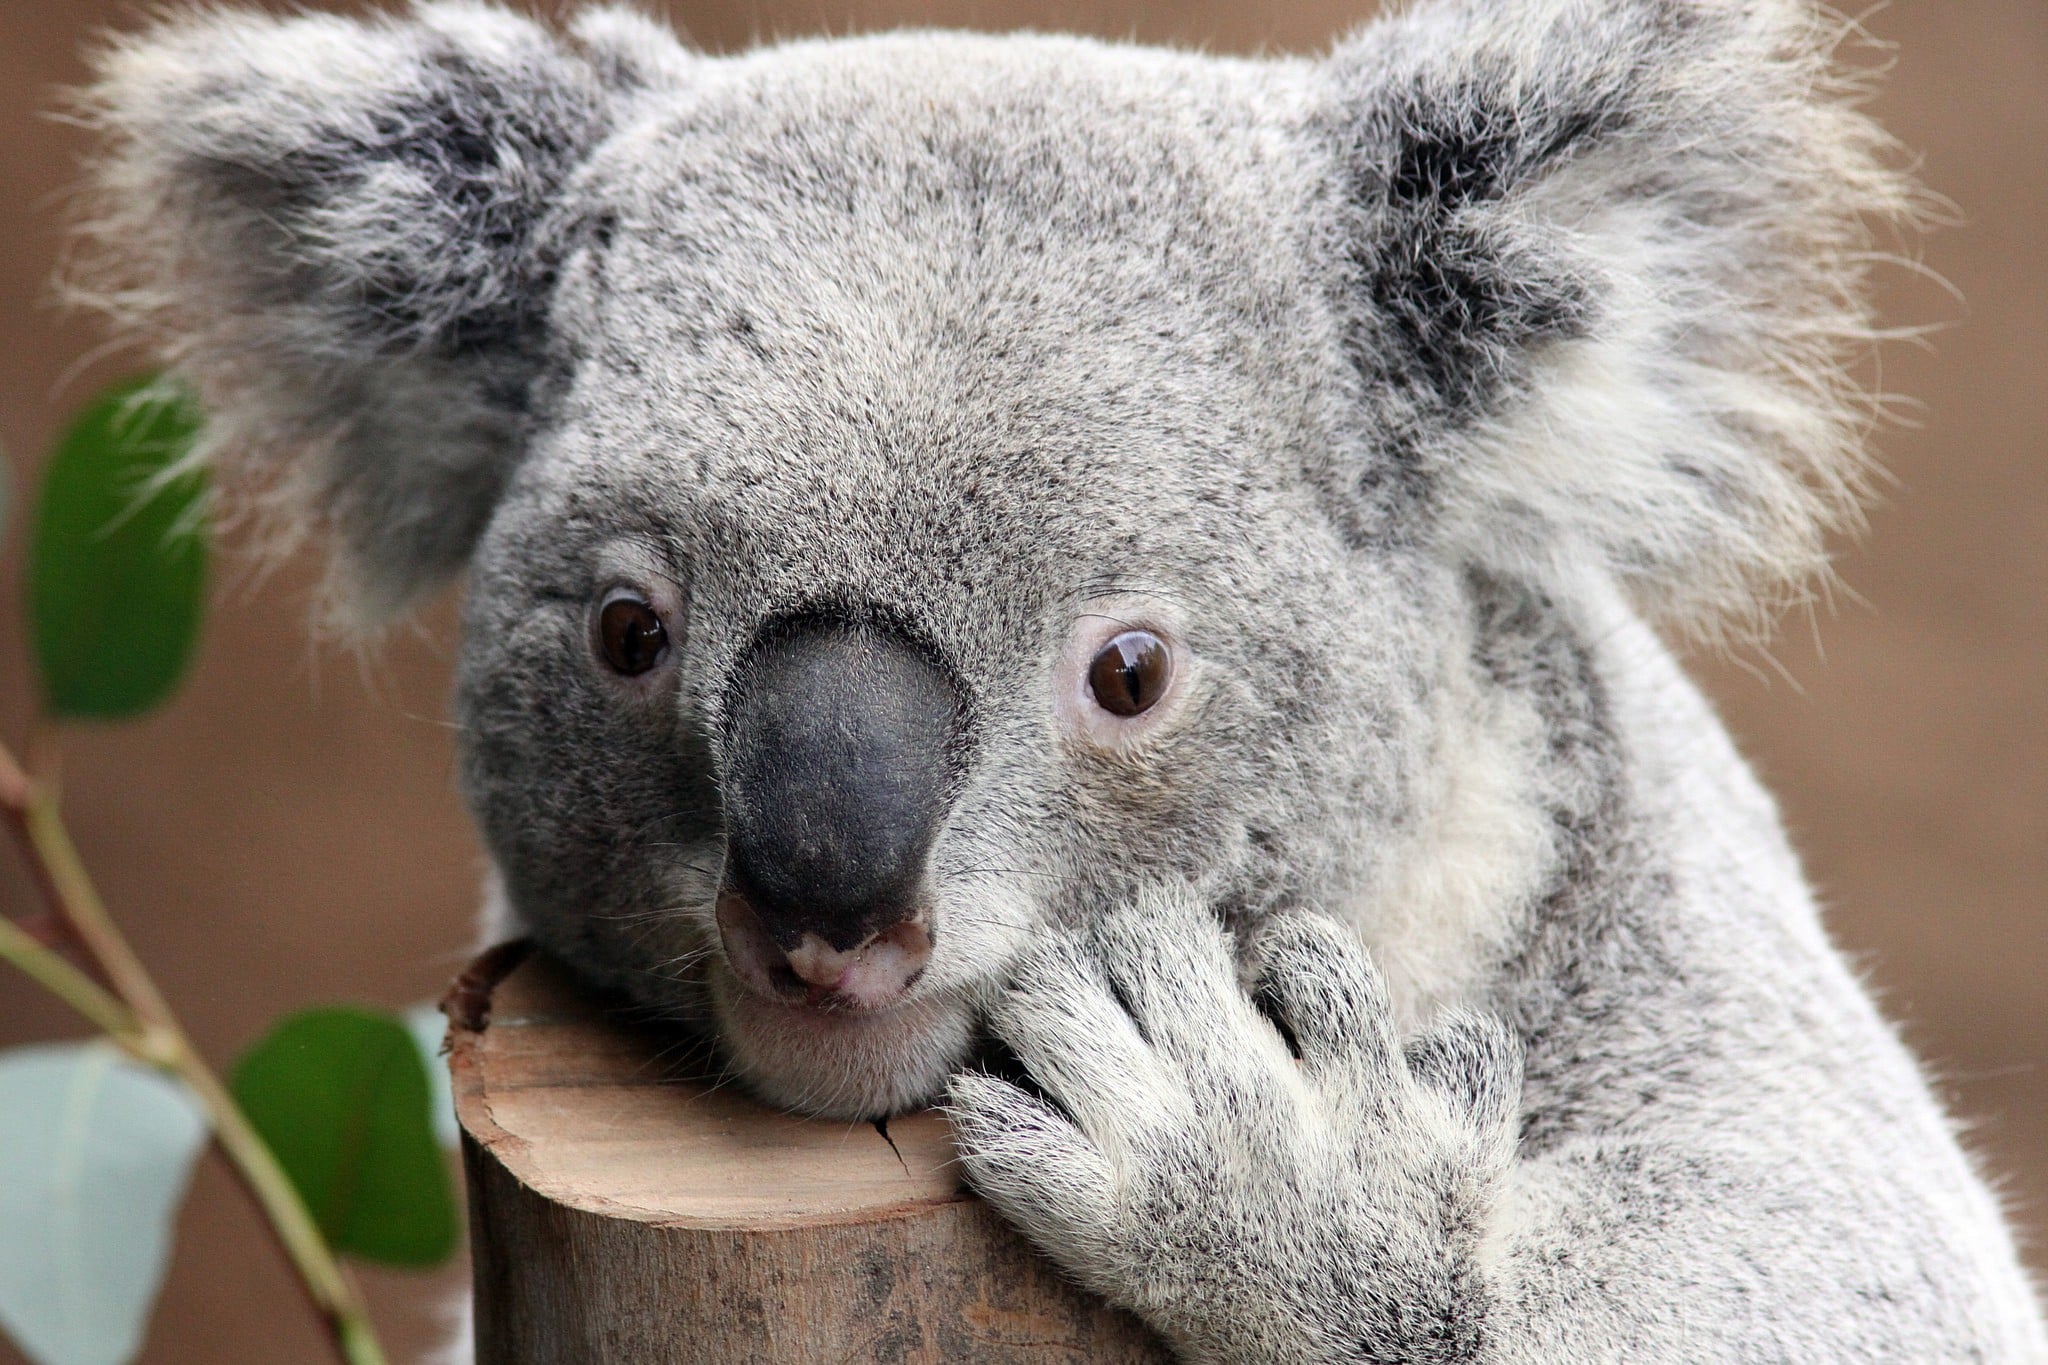 43896 Koala Bear Images Stock Photos  Vectors  Shutterstock